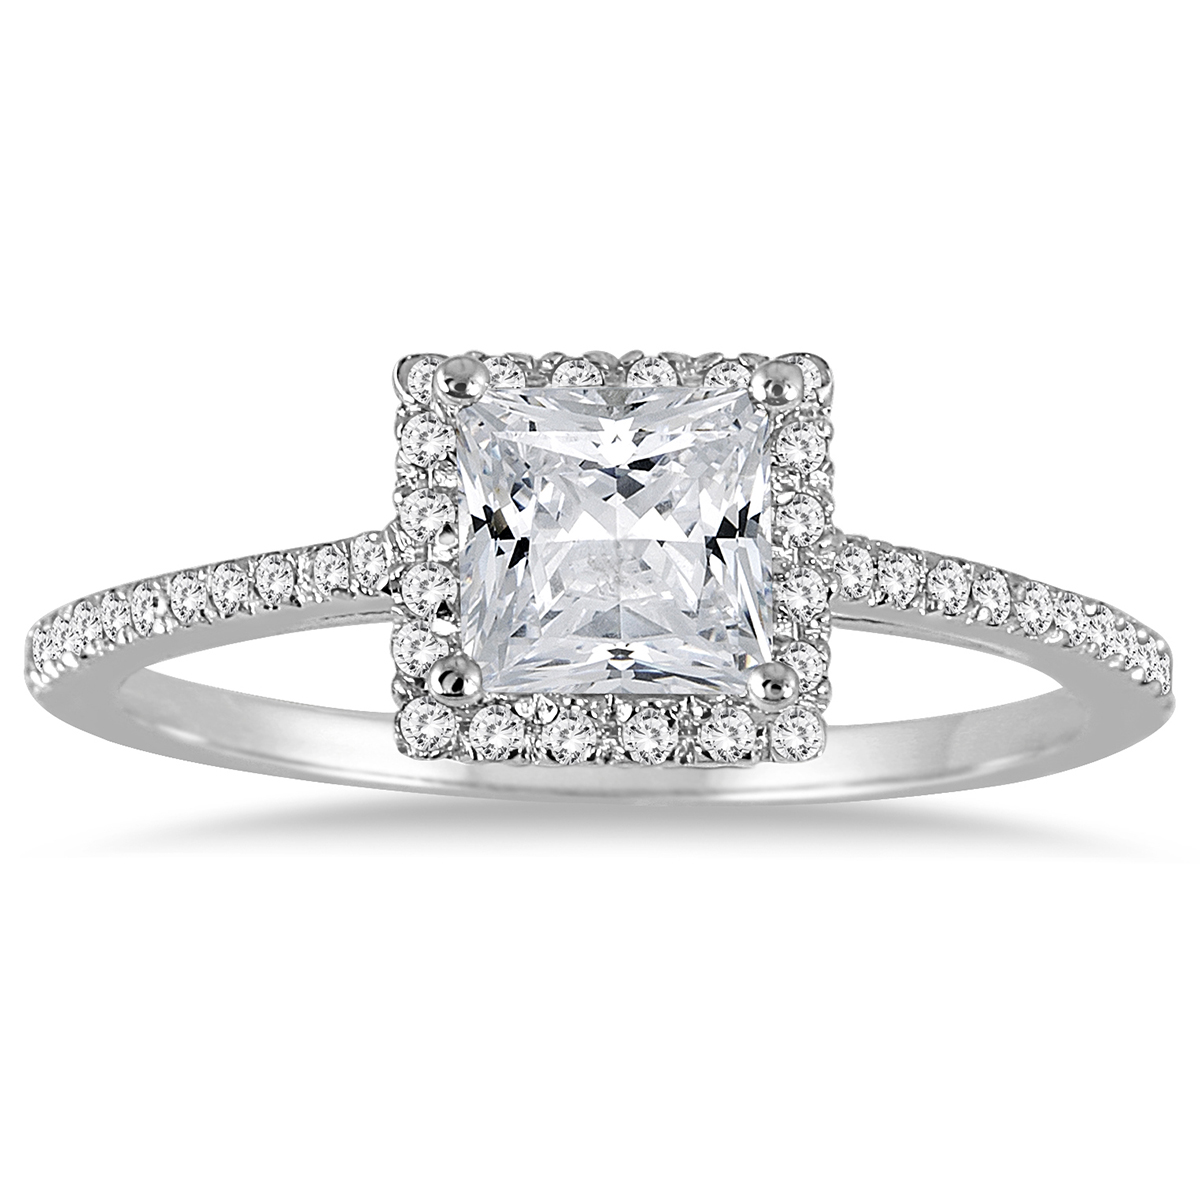 szul.com 1 Carat TW Princess Cut Diamond Engagement Ring in 14K White Gold